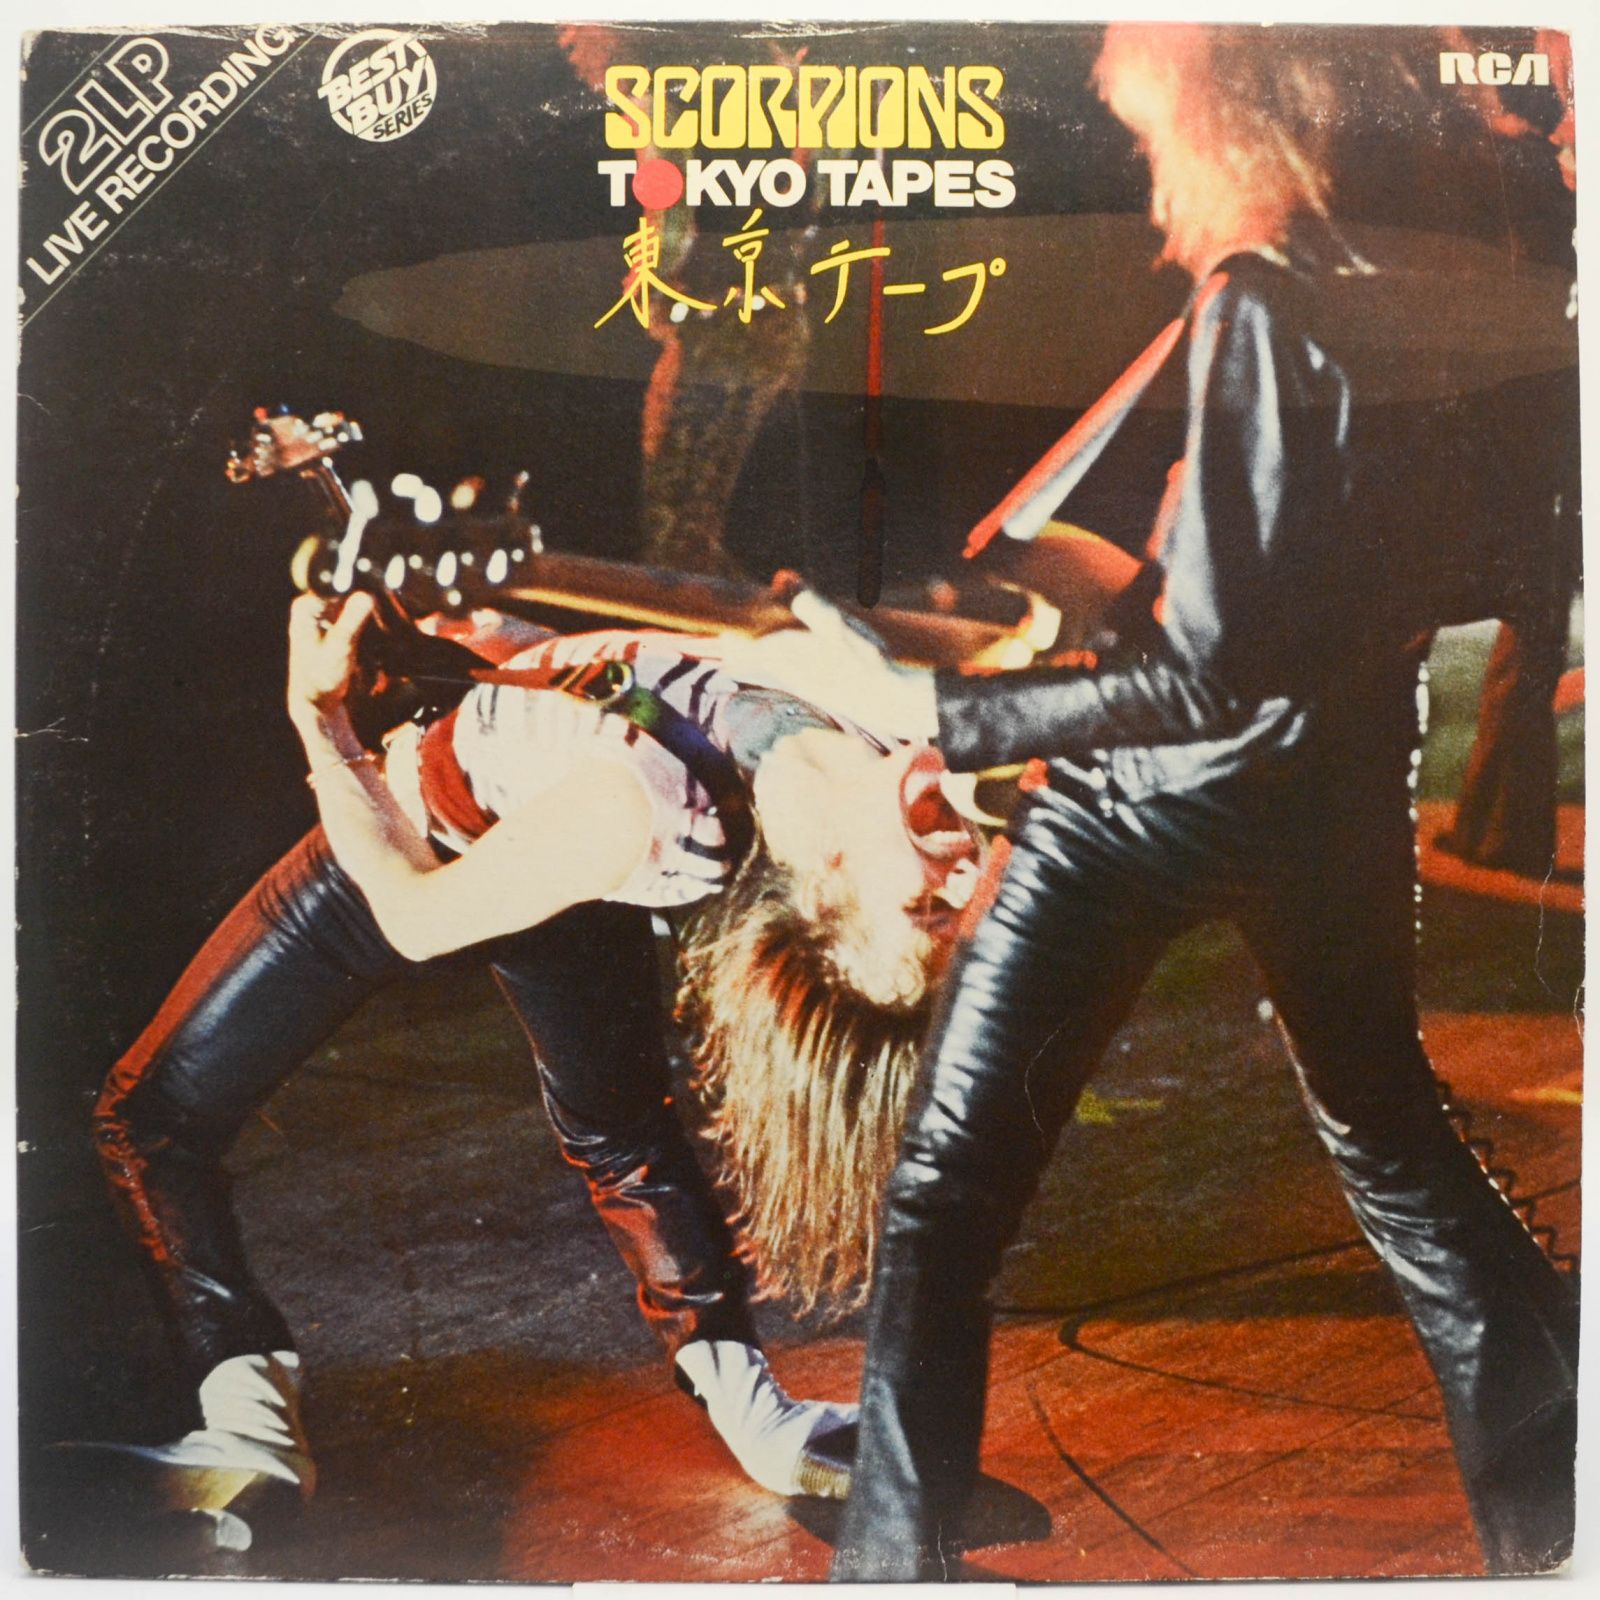 Scorpions — Tokyo Tapes (2LP), 1982